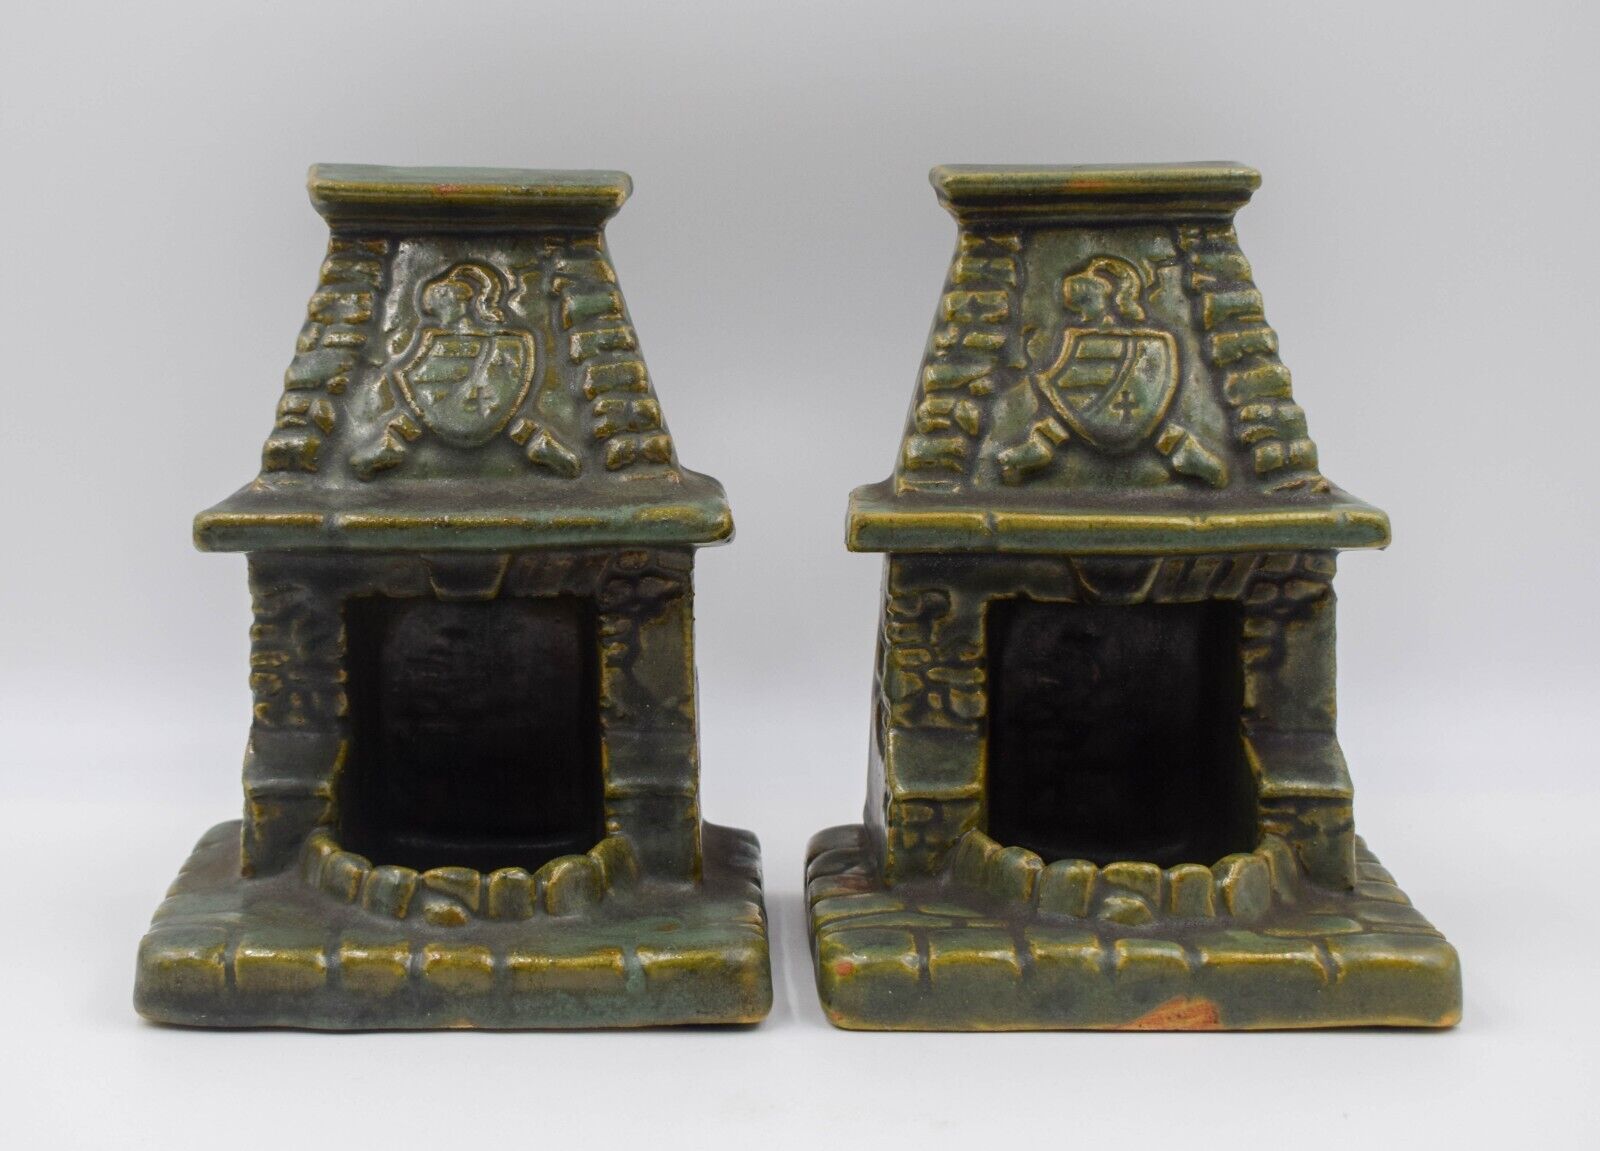 Rare Pair of Arts & Crafts Fulper Bookends - Fireplace Mantles, Circa 1920